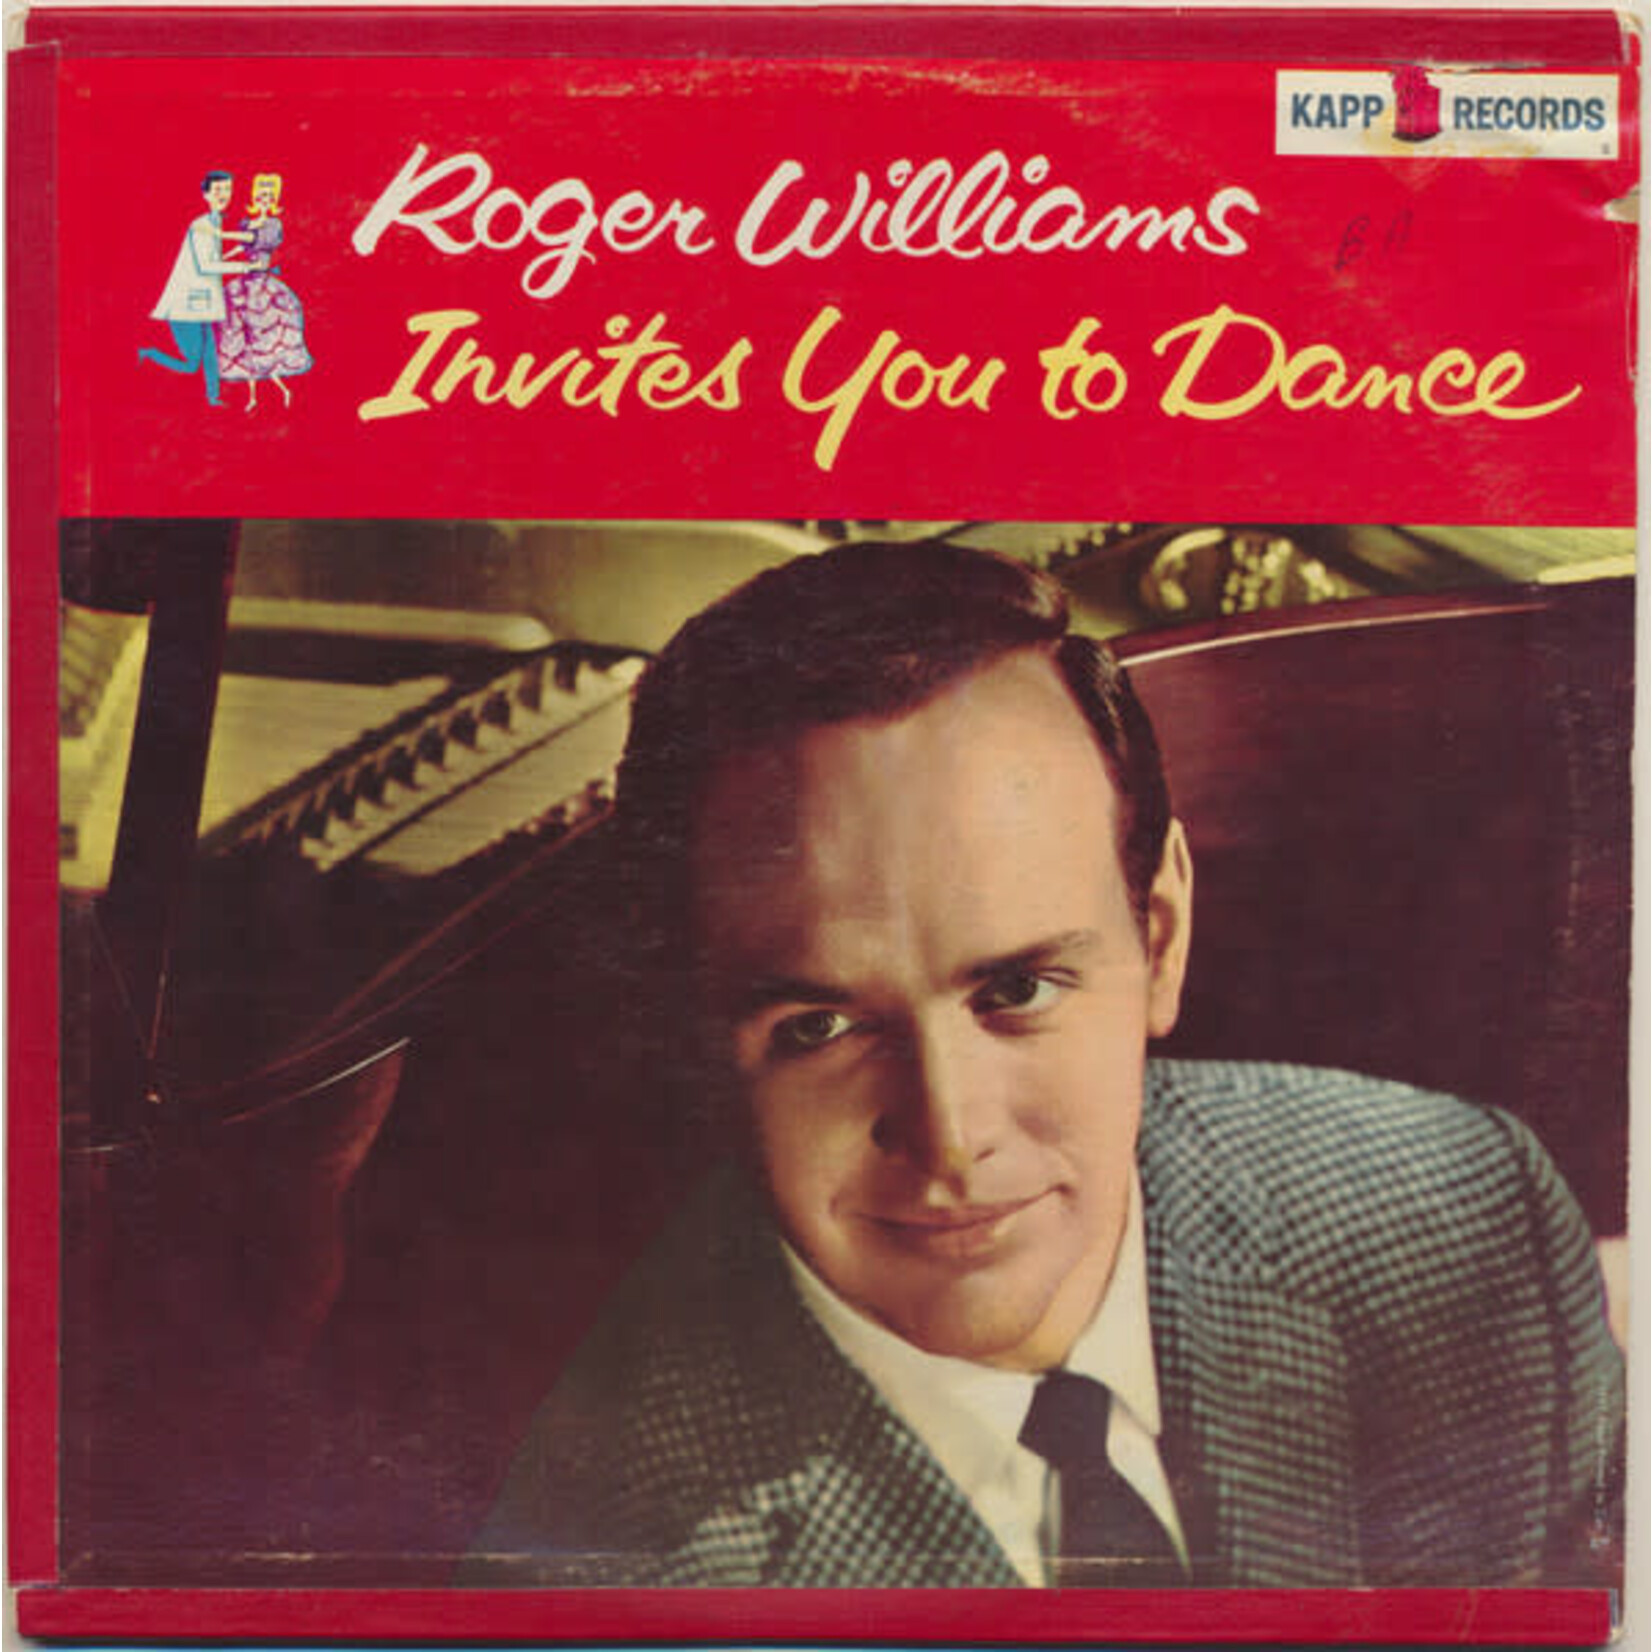 Roger Williams – Invites You To Dance (G+, 1961, LP, Kapp Records – KL-1222)